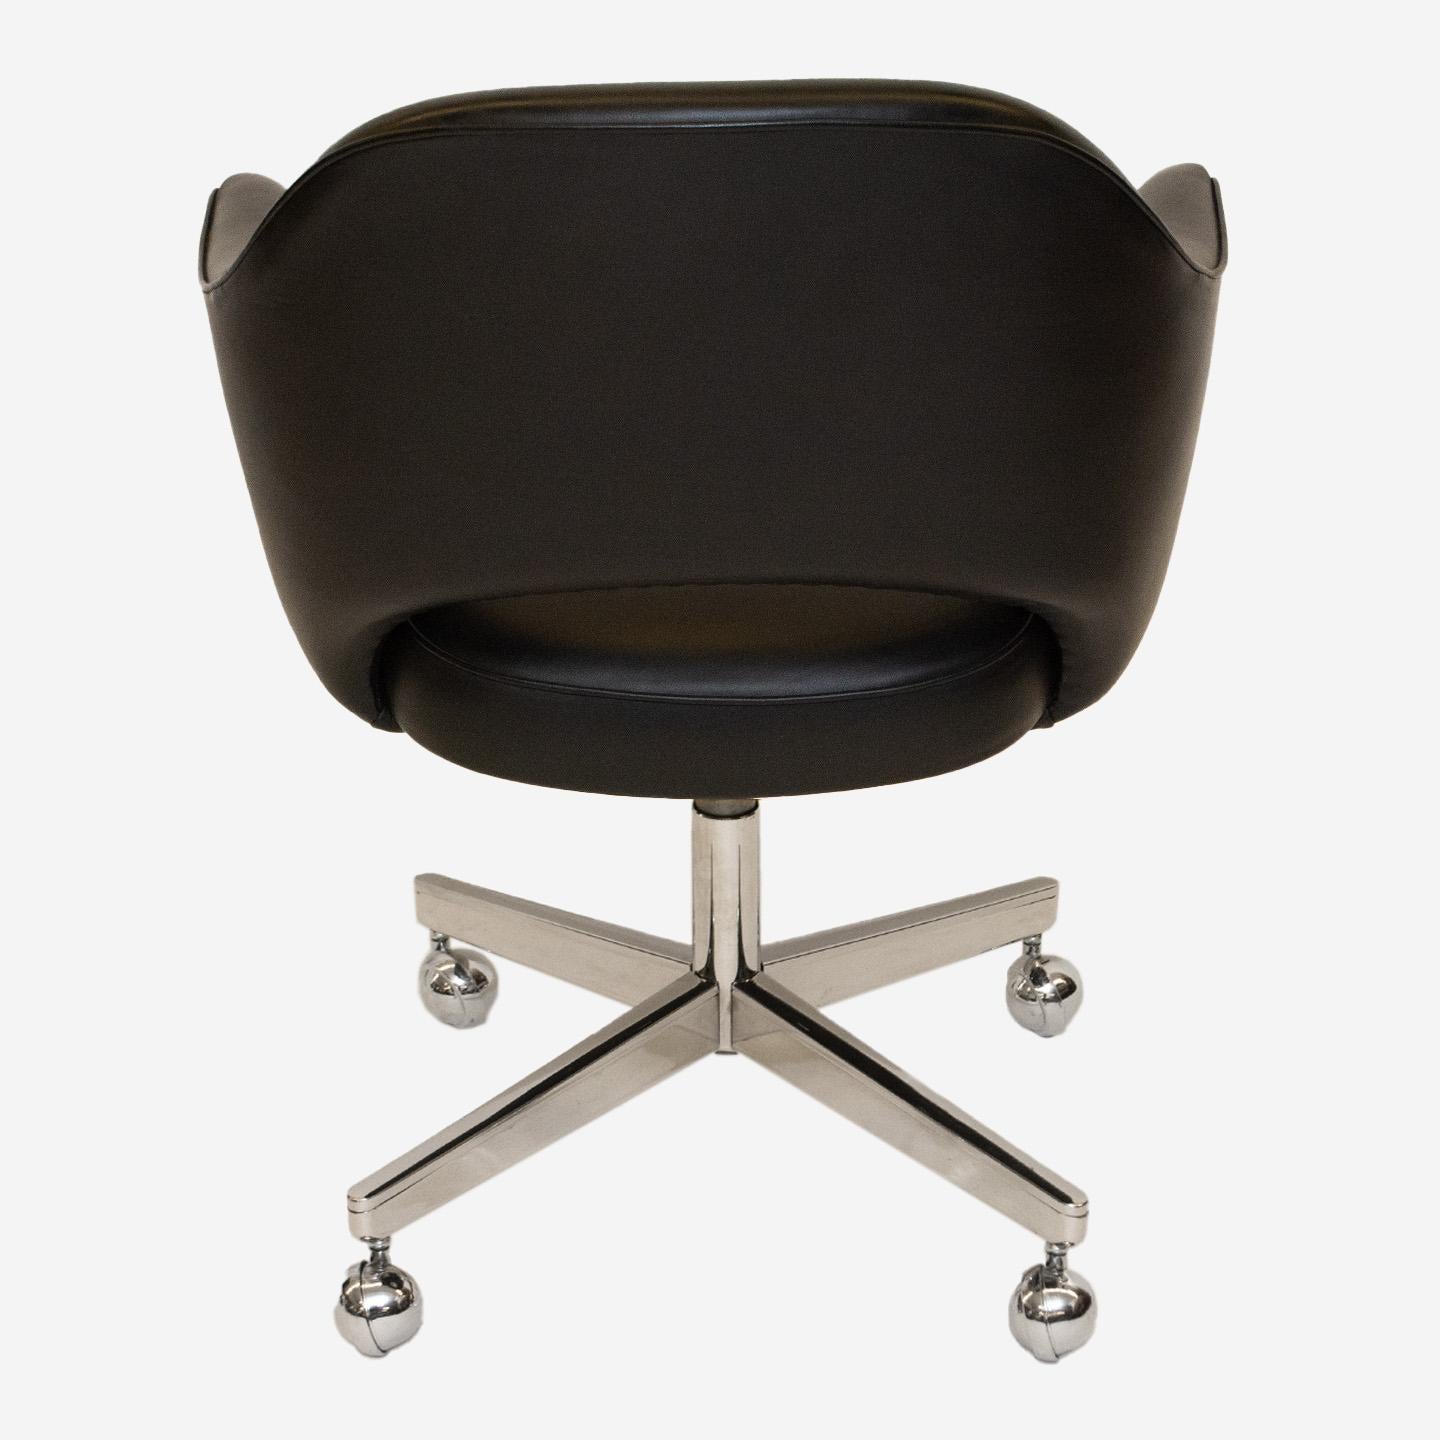 Late 20th Century Saarinen Executive Armchair in Original Black Leather, Nickel Swivel Base